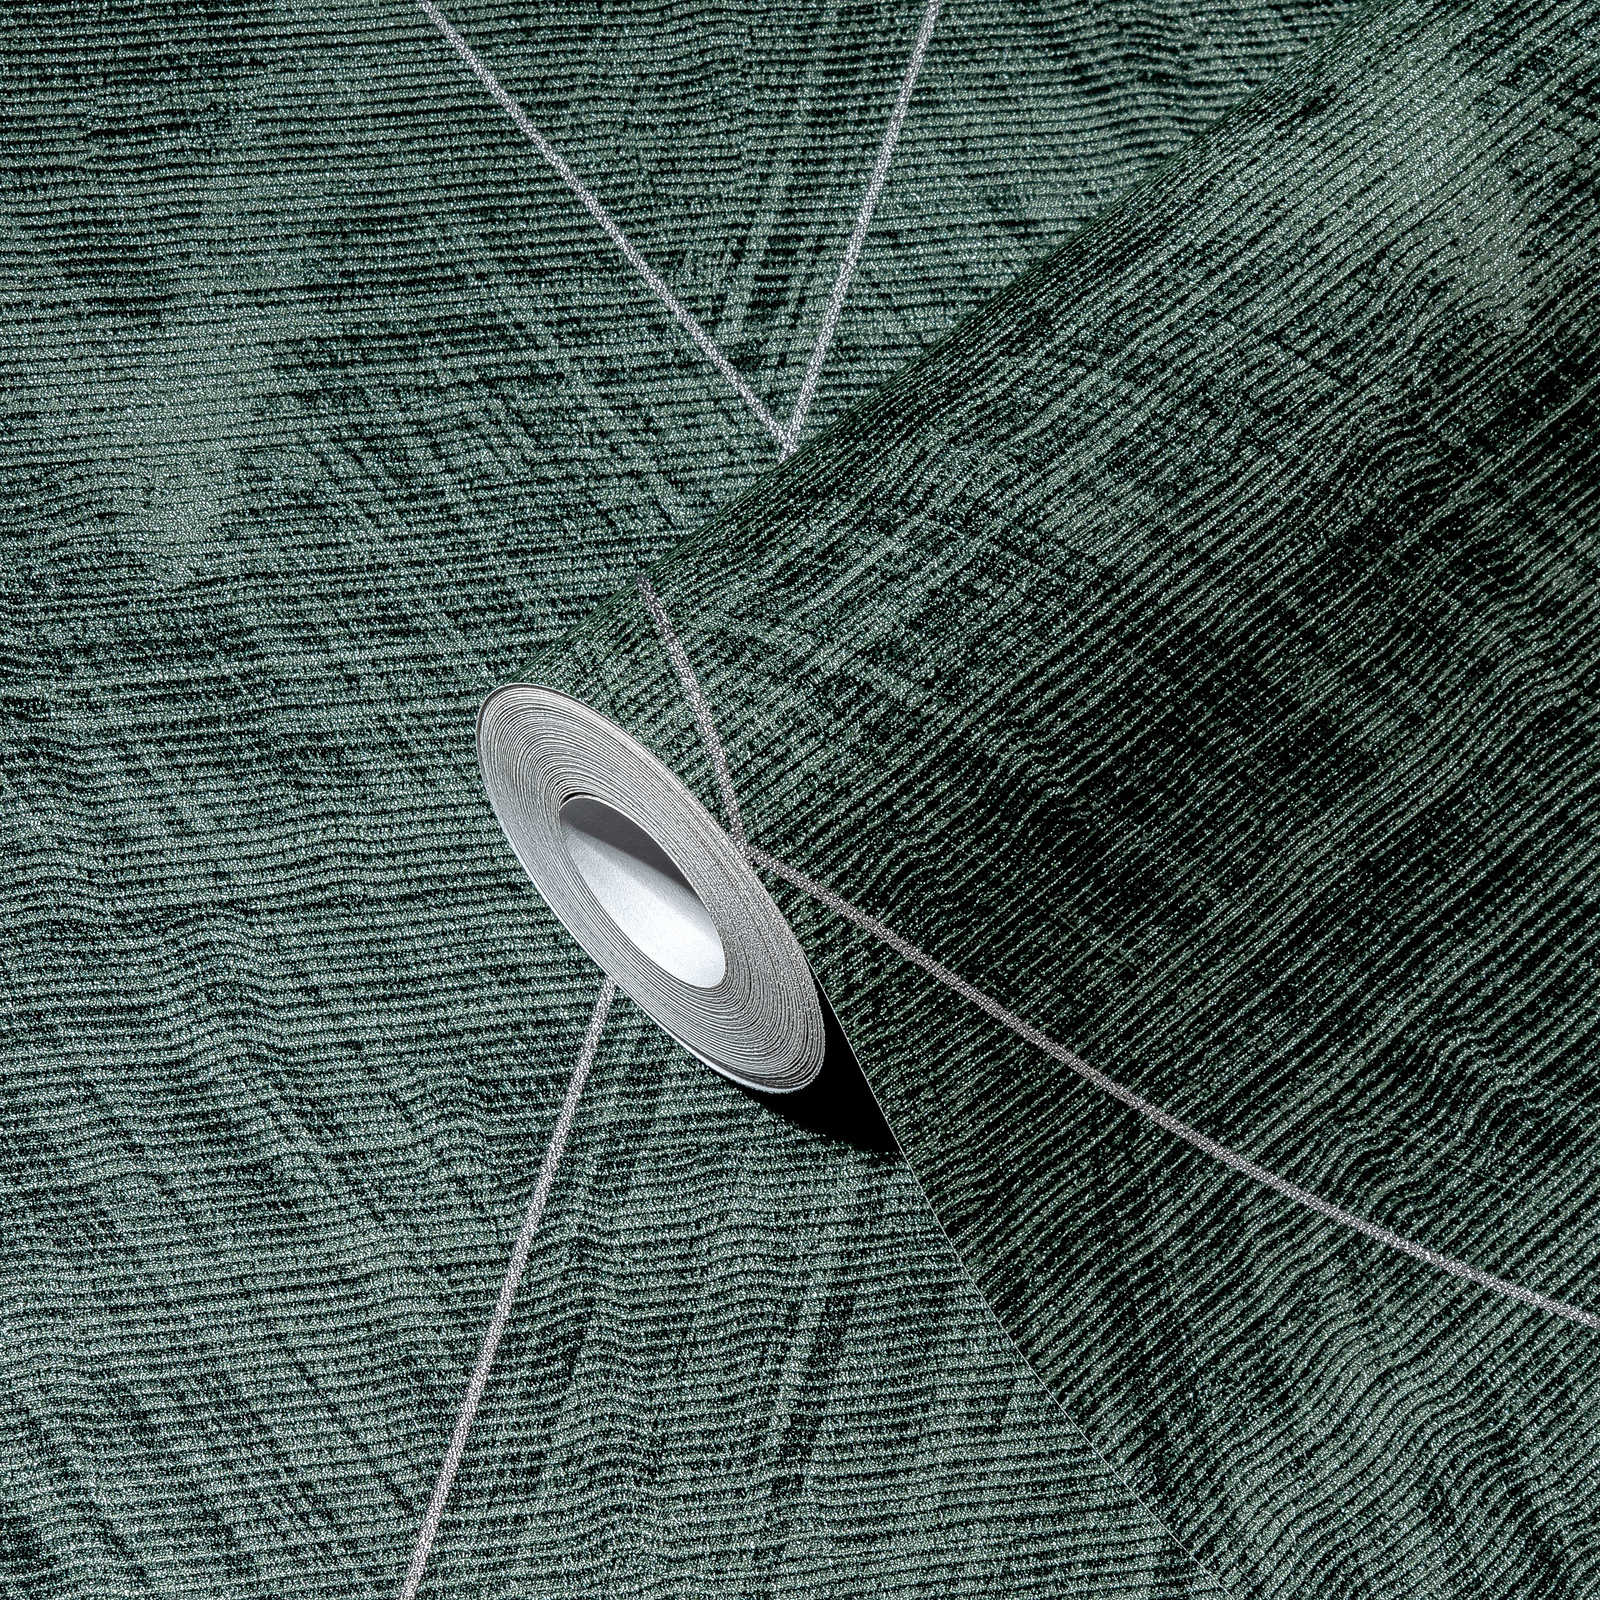             Rauten Tapete mit melierter Textiloptik – Metallic, Grün
        